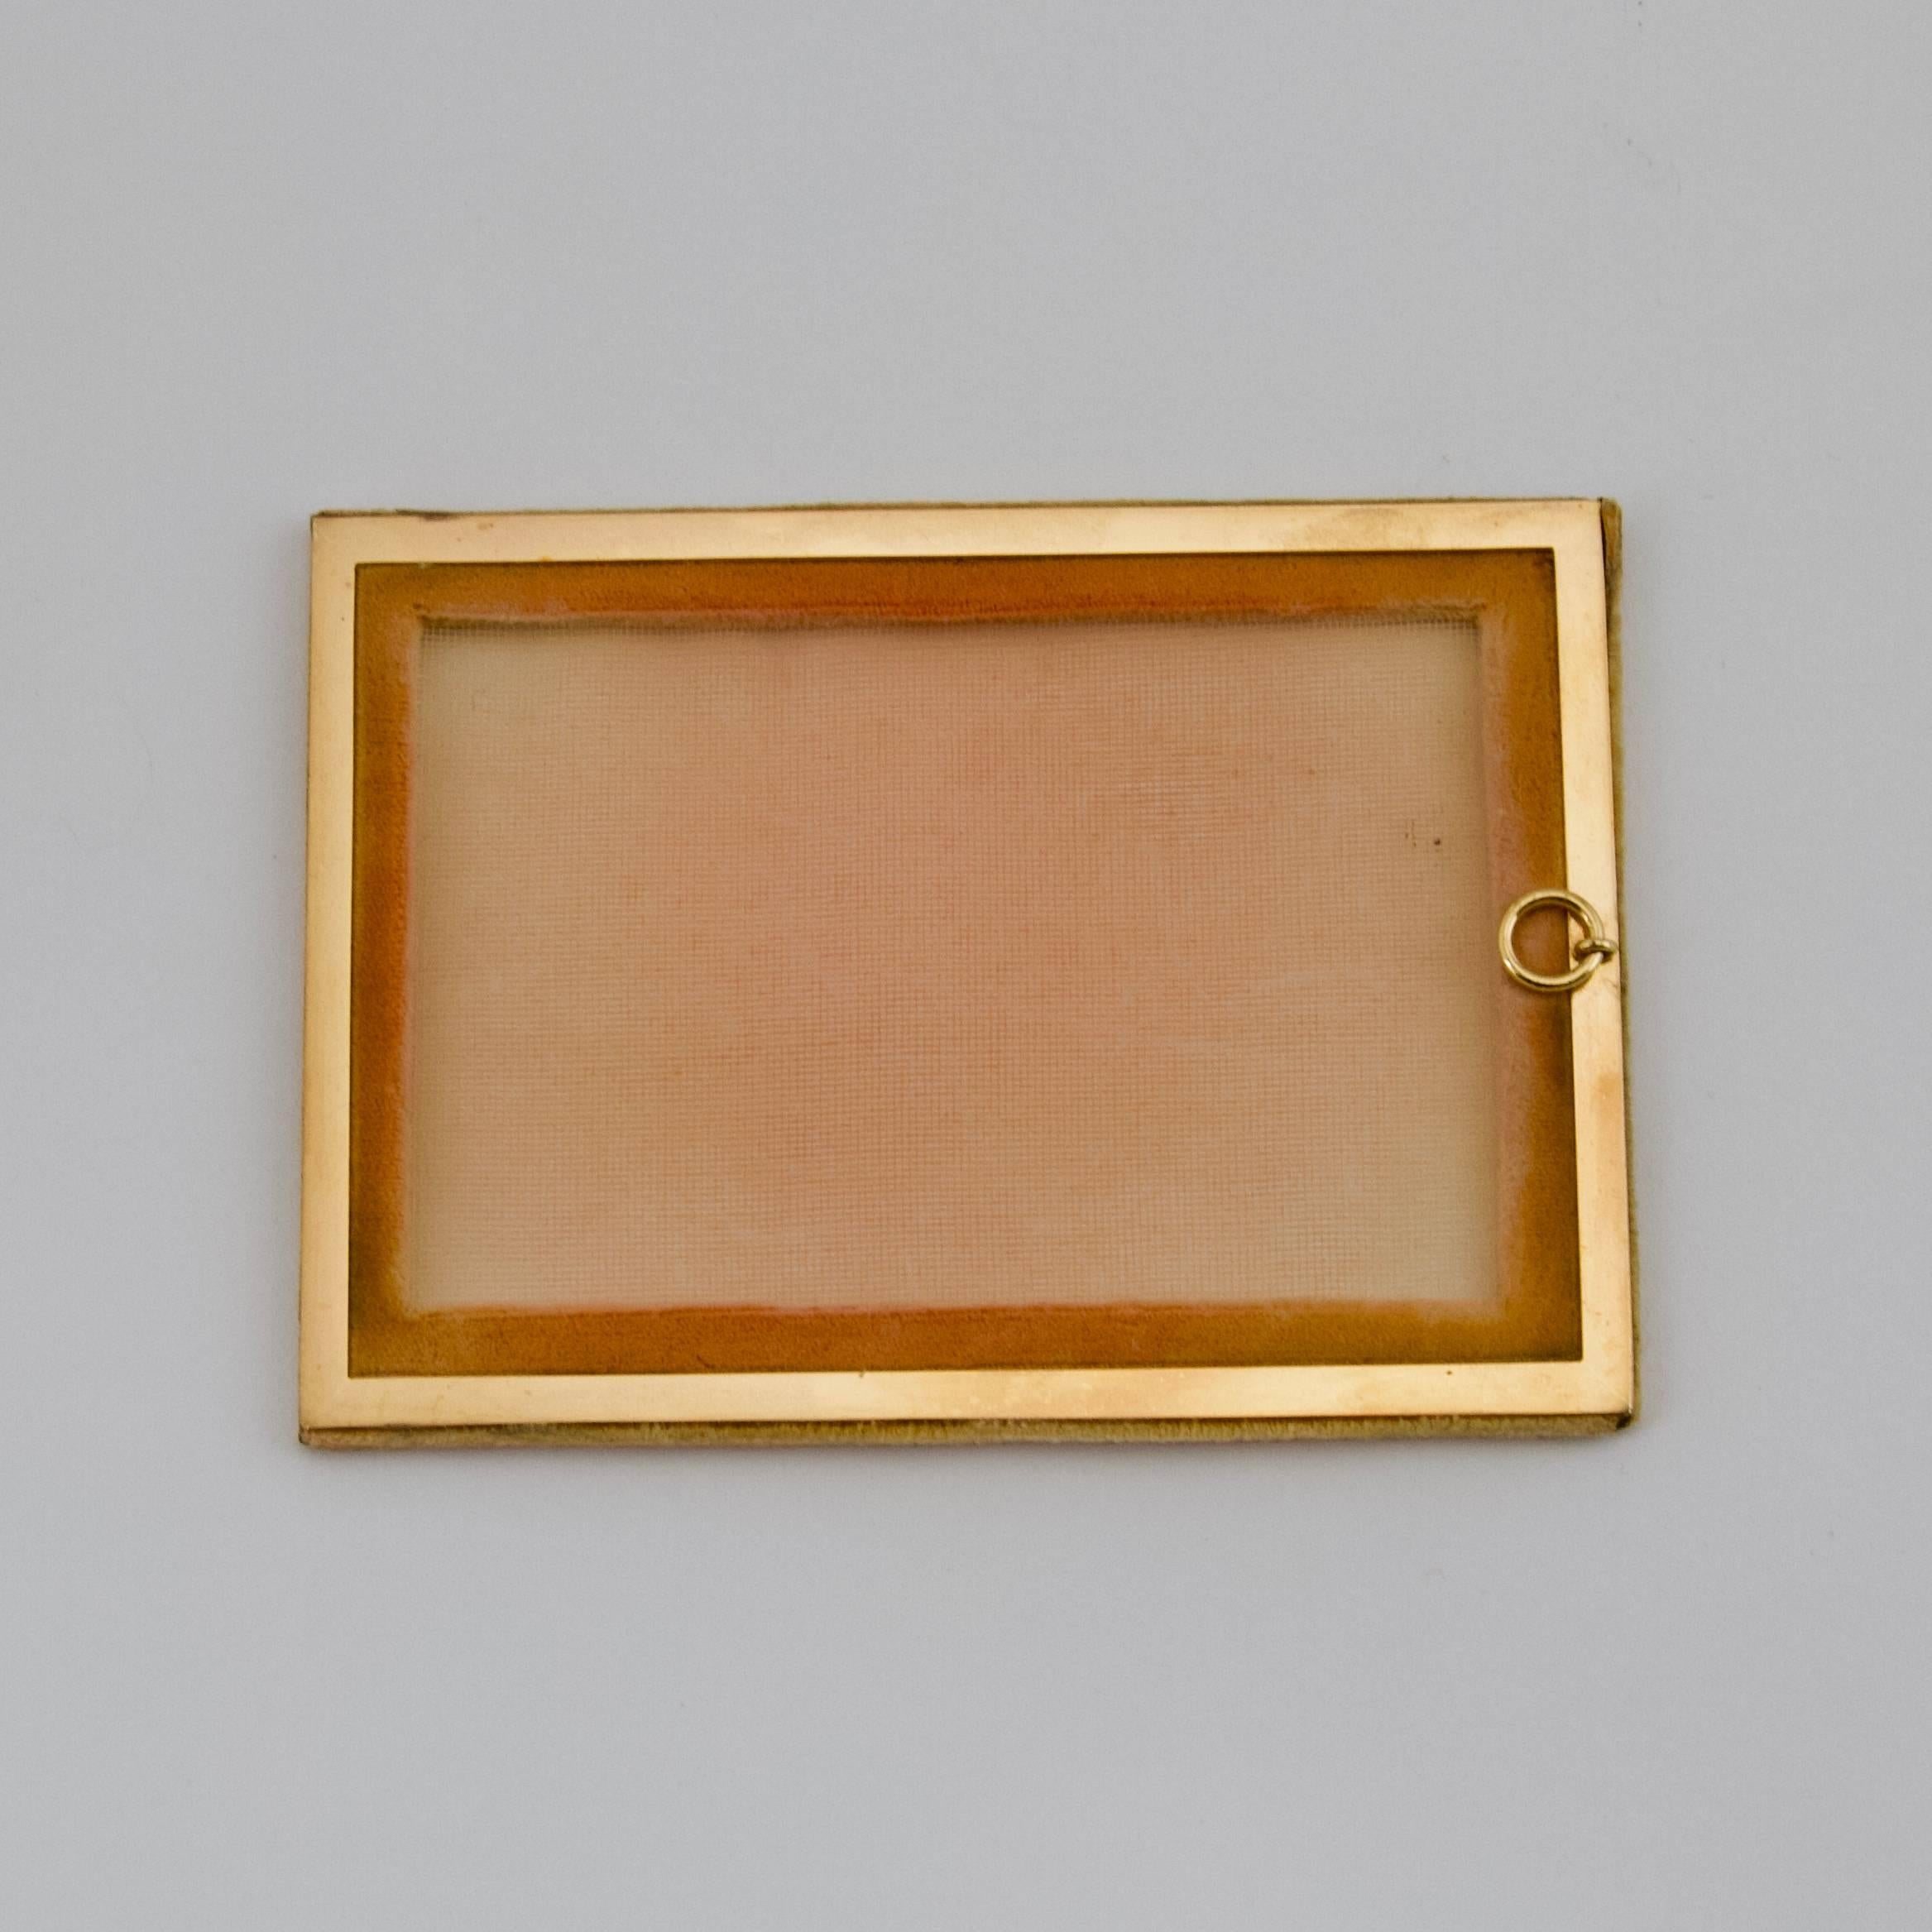 Gold Art Deco Van Cleef & Arpels Powder Box For Sale